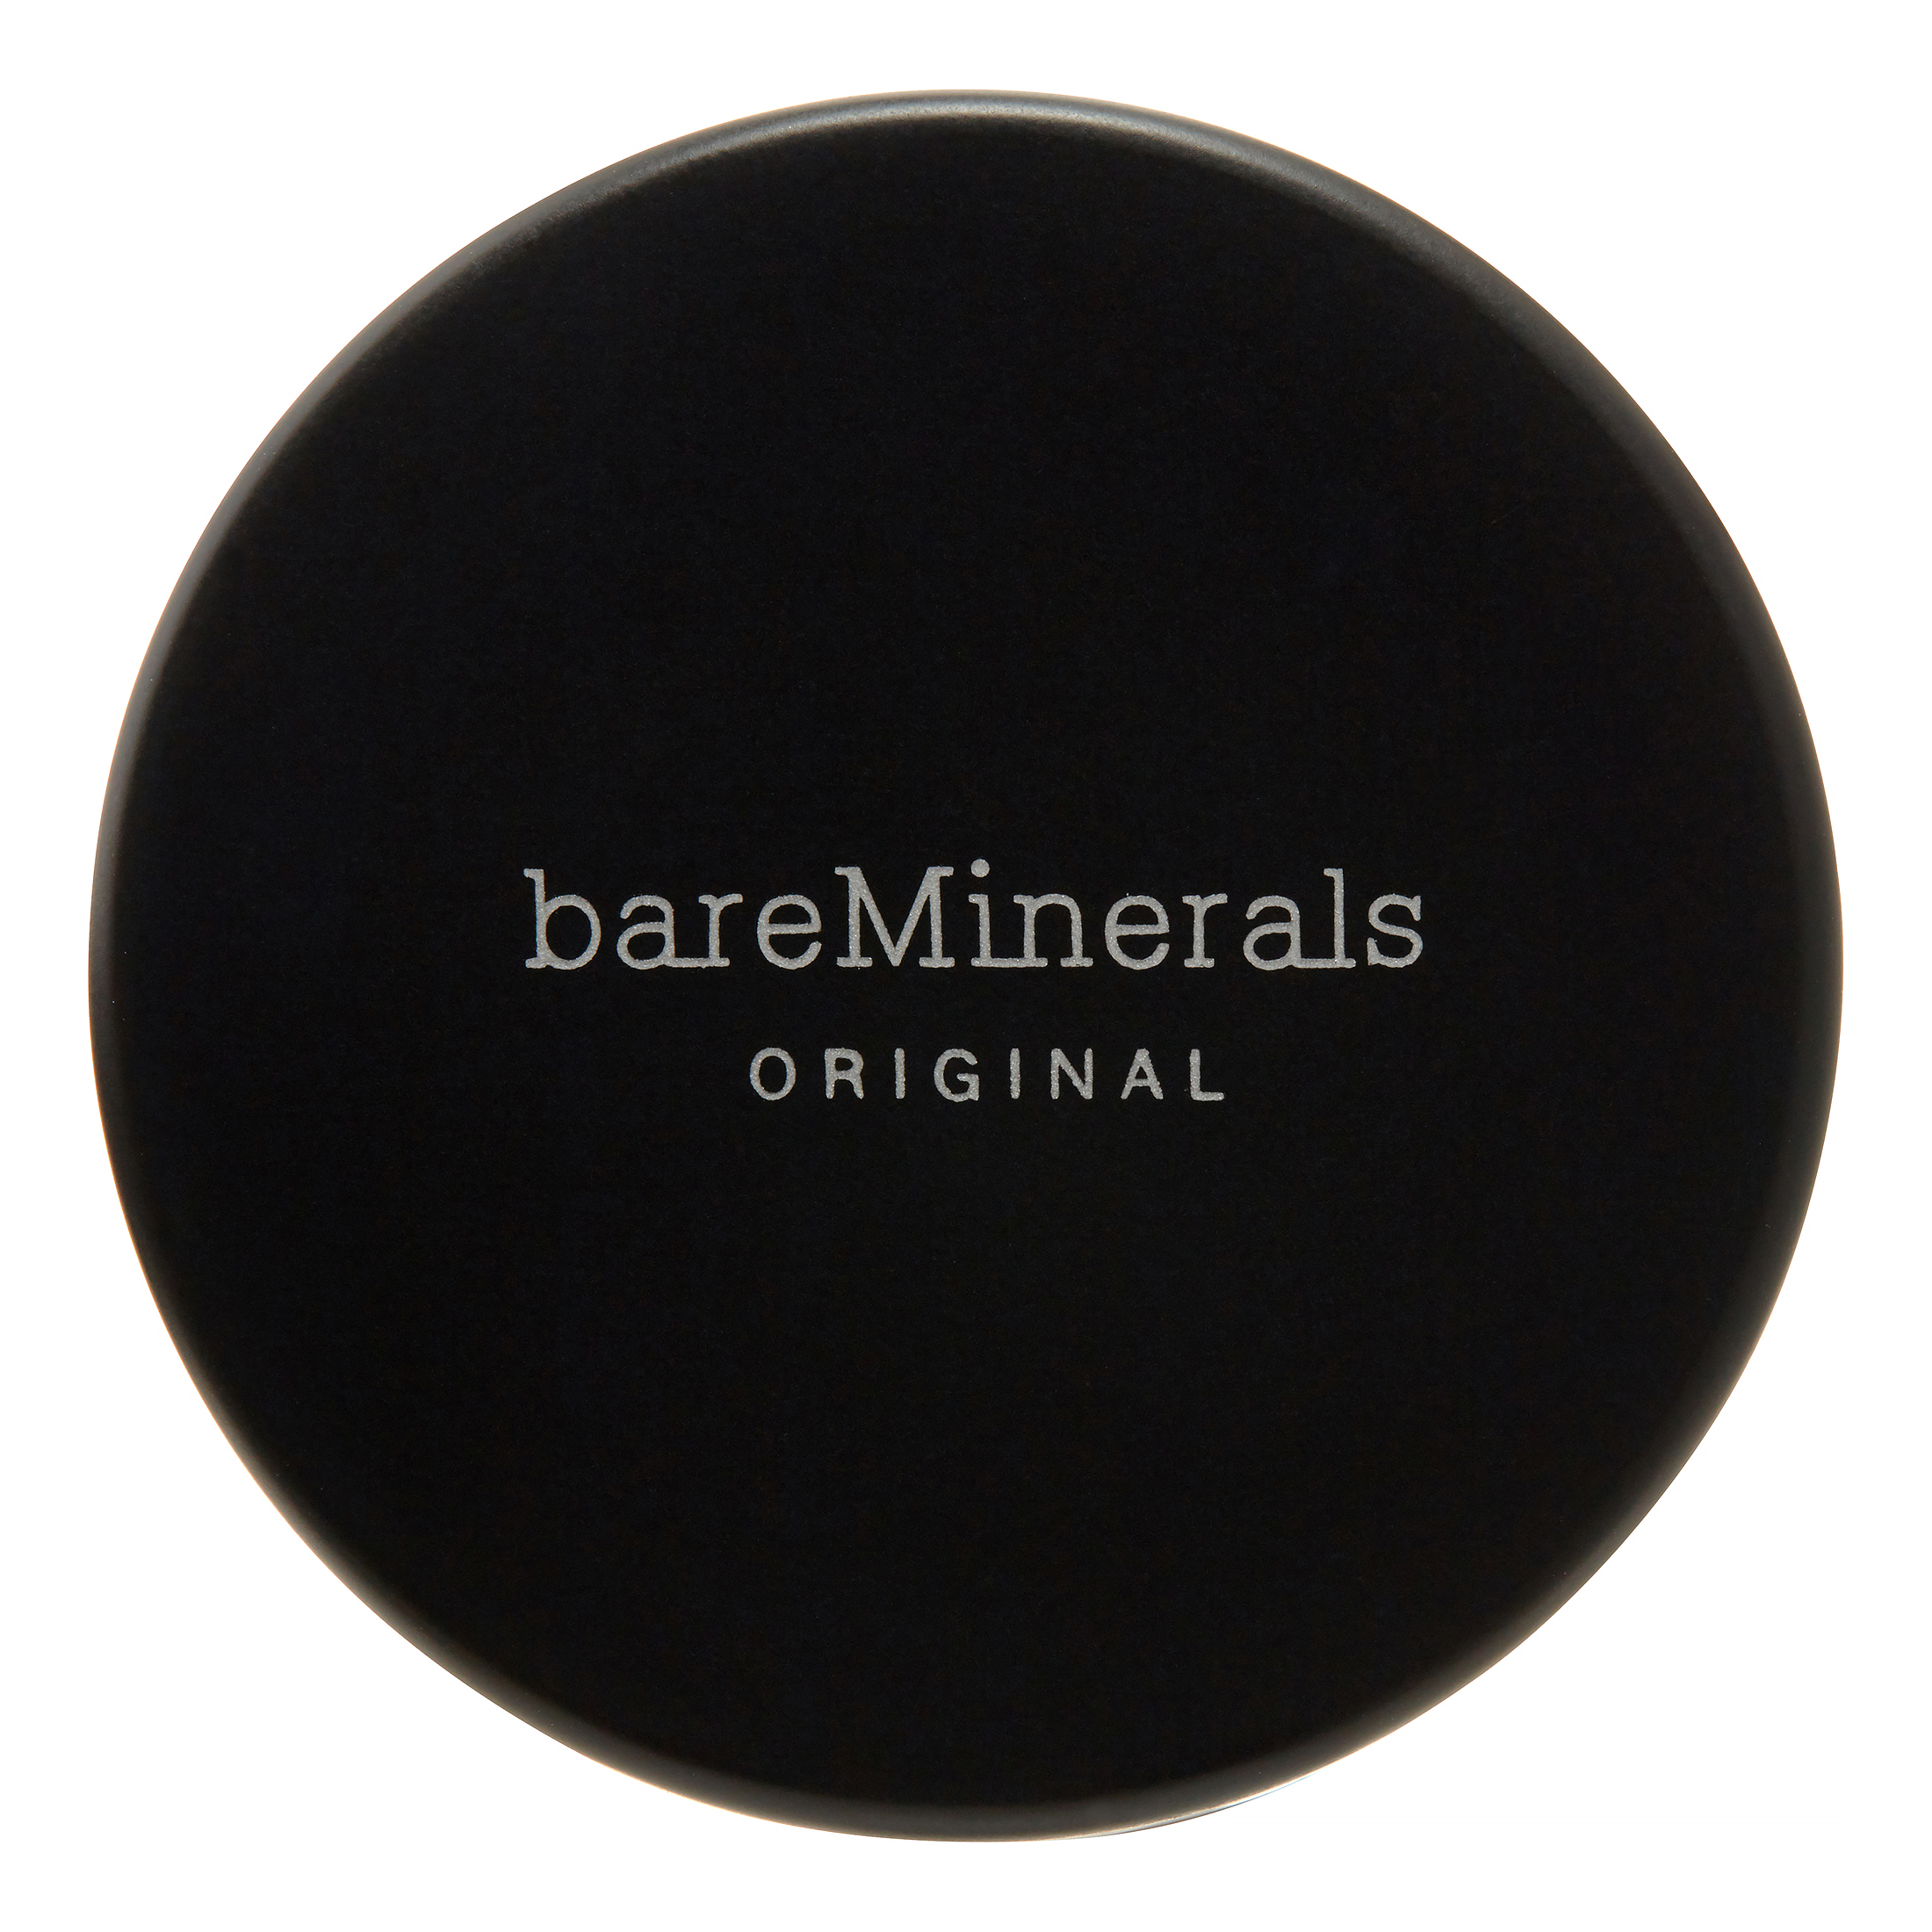 Bare Minerals Original Loose Mineral Powder Foundation SPF 15 Light 08, 0.28 oz - image 5 of 5